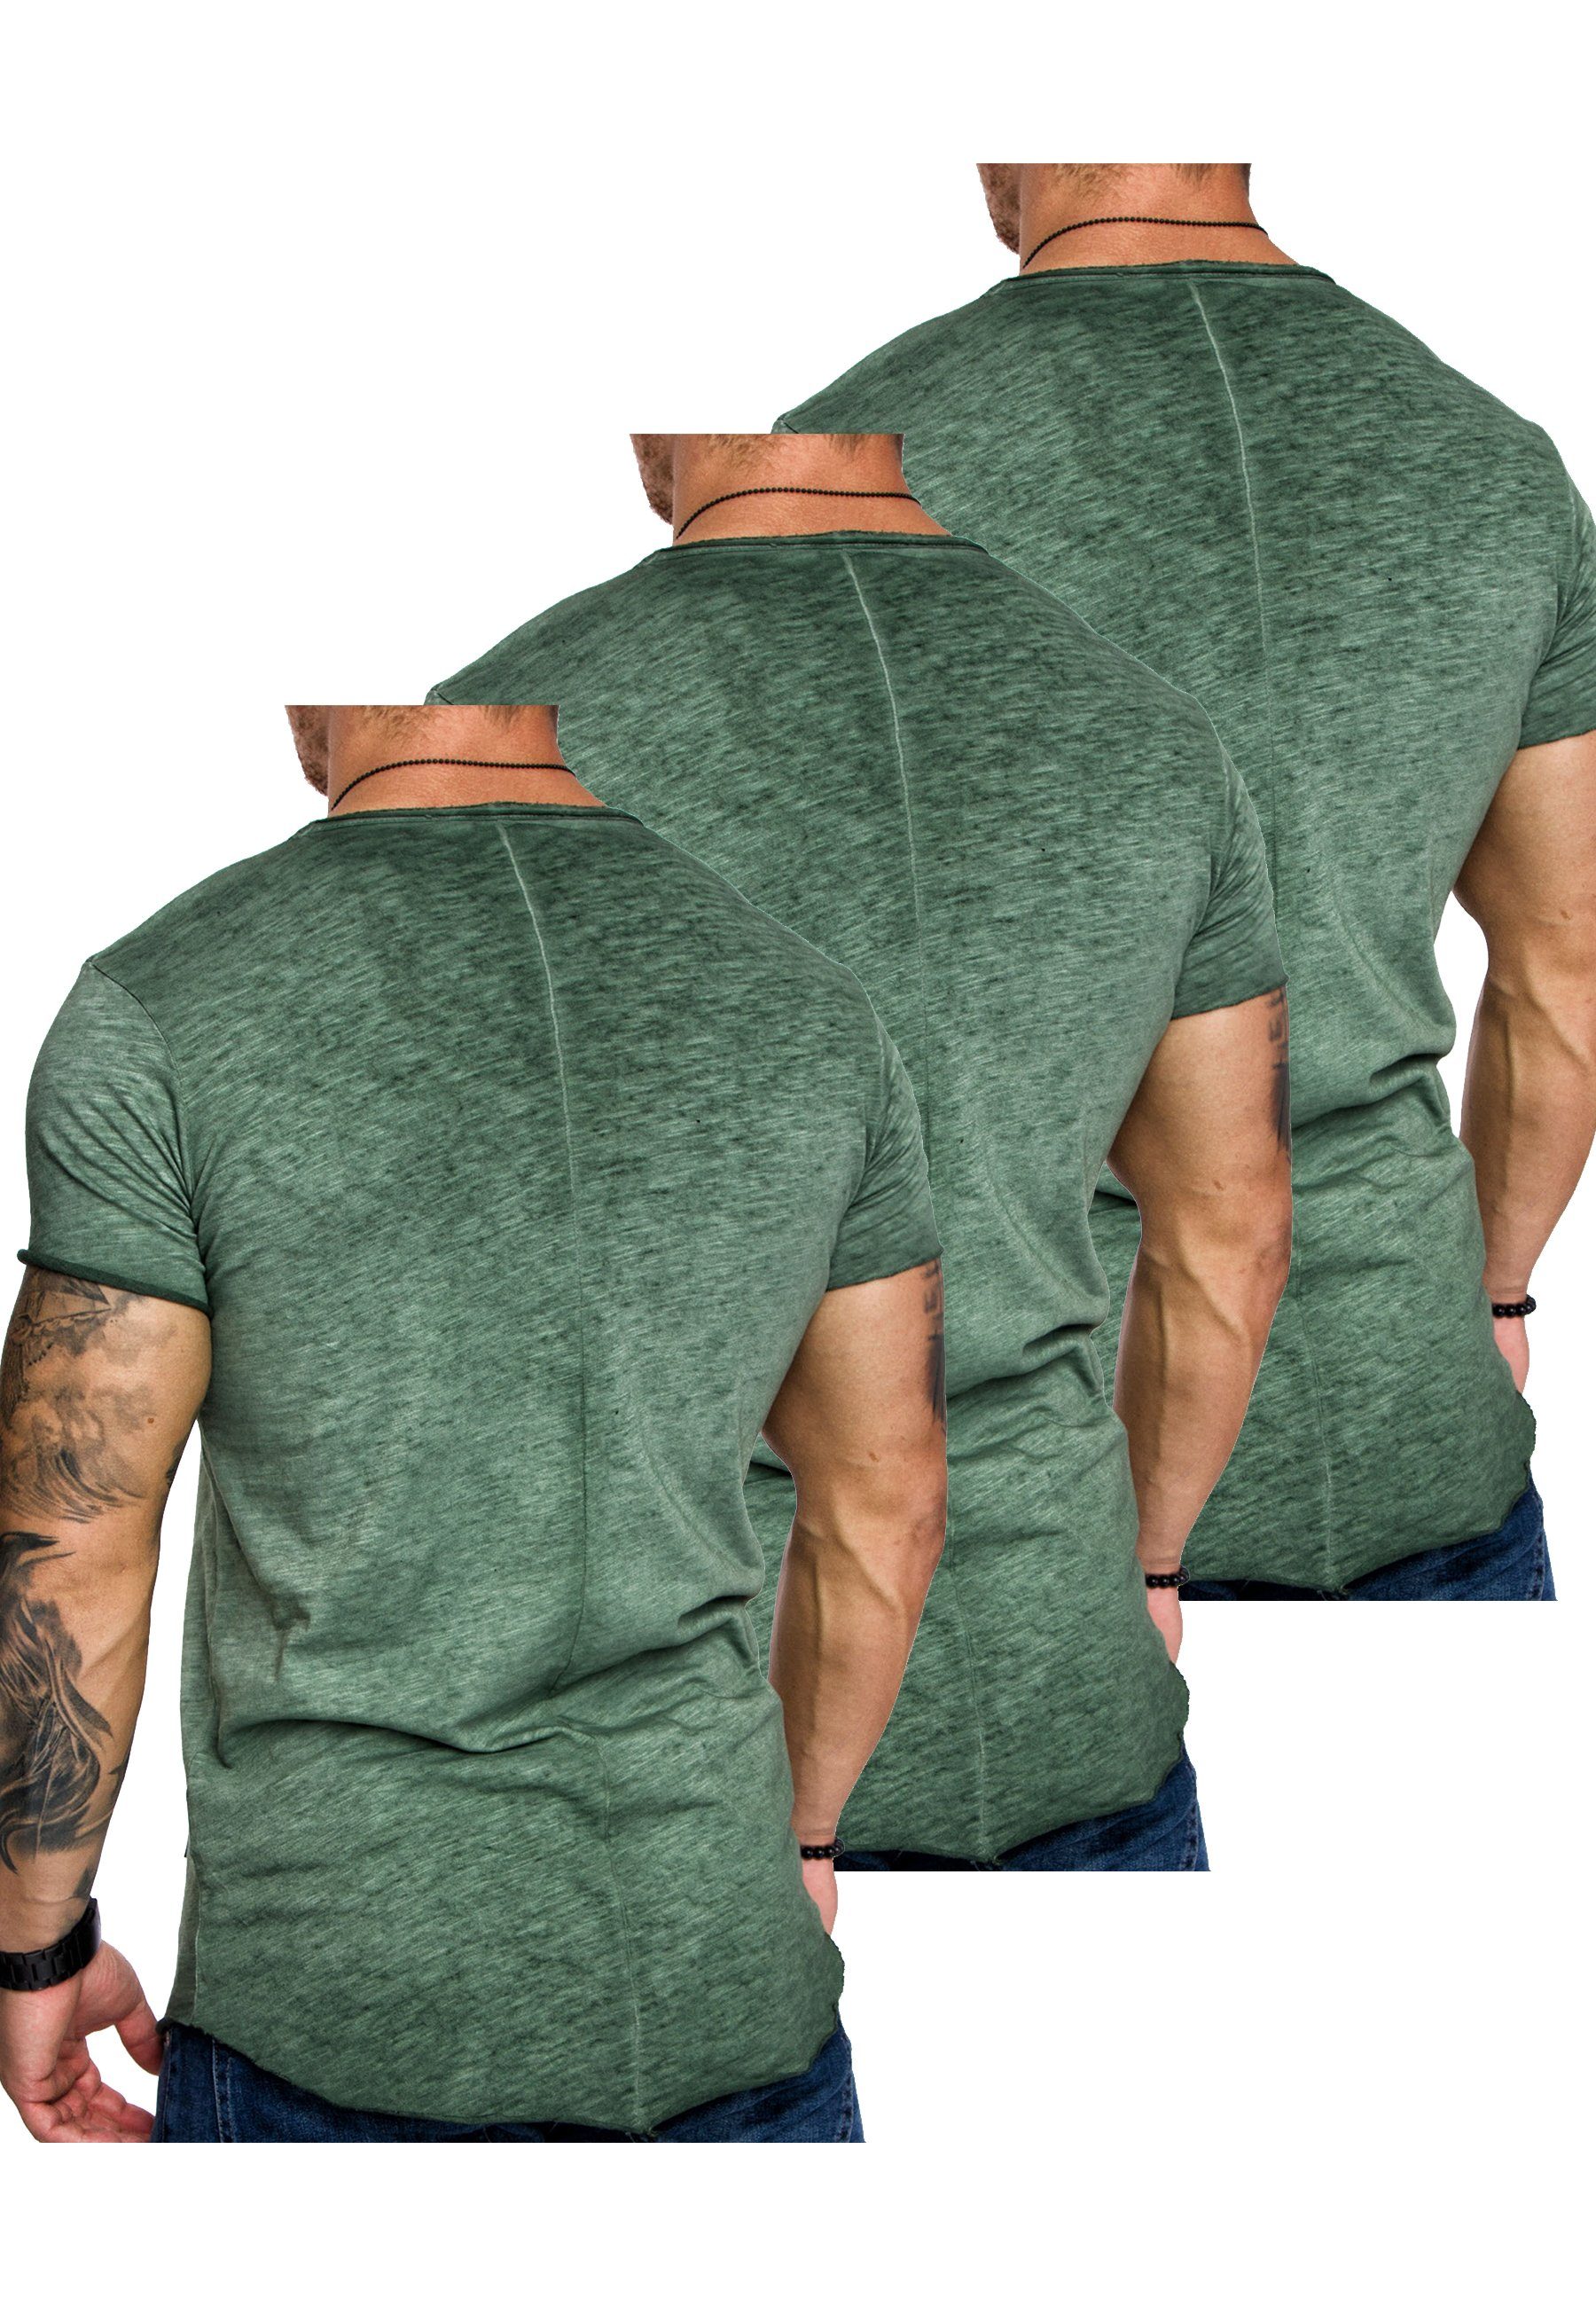 Herren NYC Amaci&Sons V-Ausschnitt T-Shirts T-Shirt mit 3. Oversize 3er-Pack Herren T-Shirt Khaki) (3er-Pack) Basic (3x